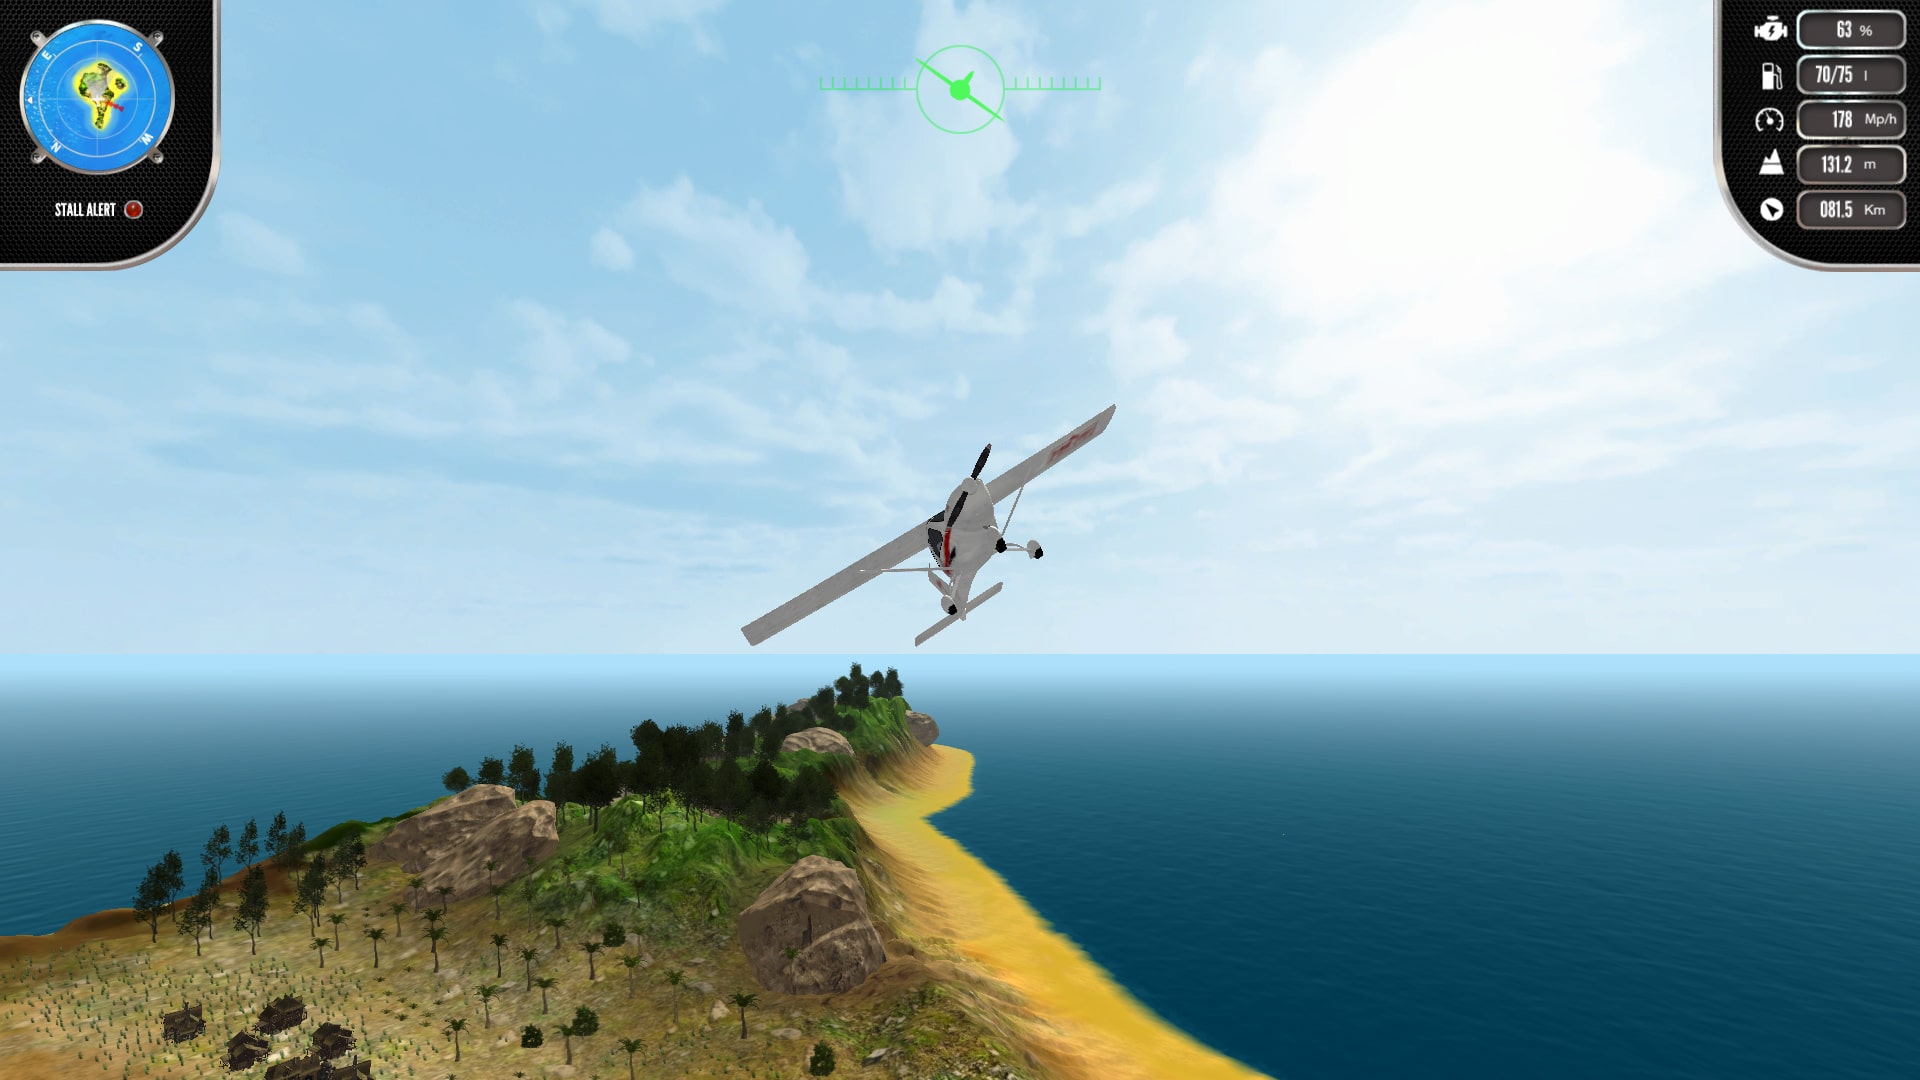 Island Flight Simulator - Download game PS3 PS4 PS2 RPCS3 PC free